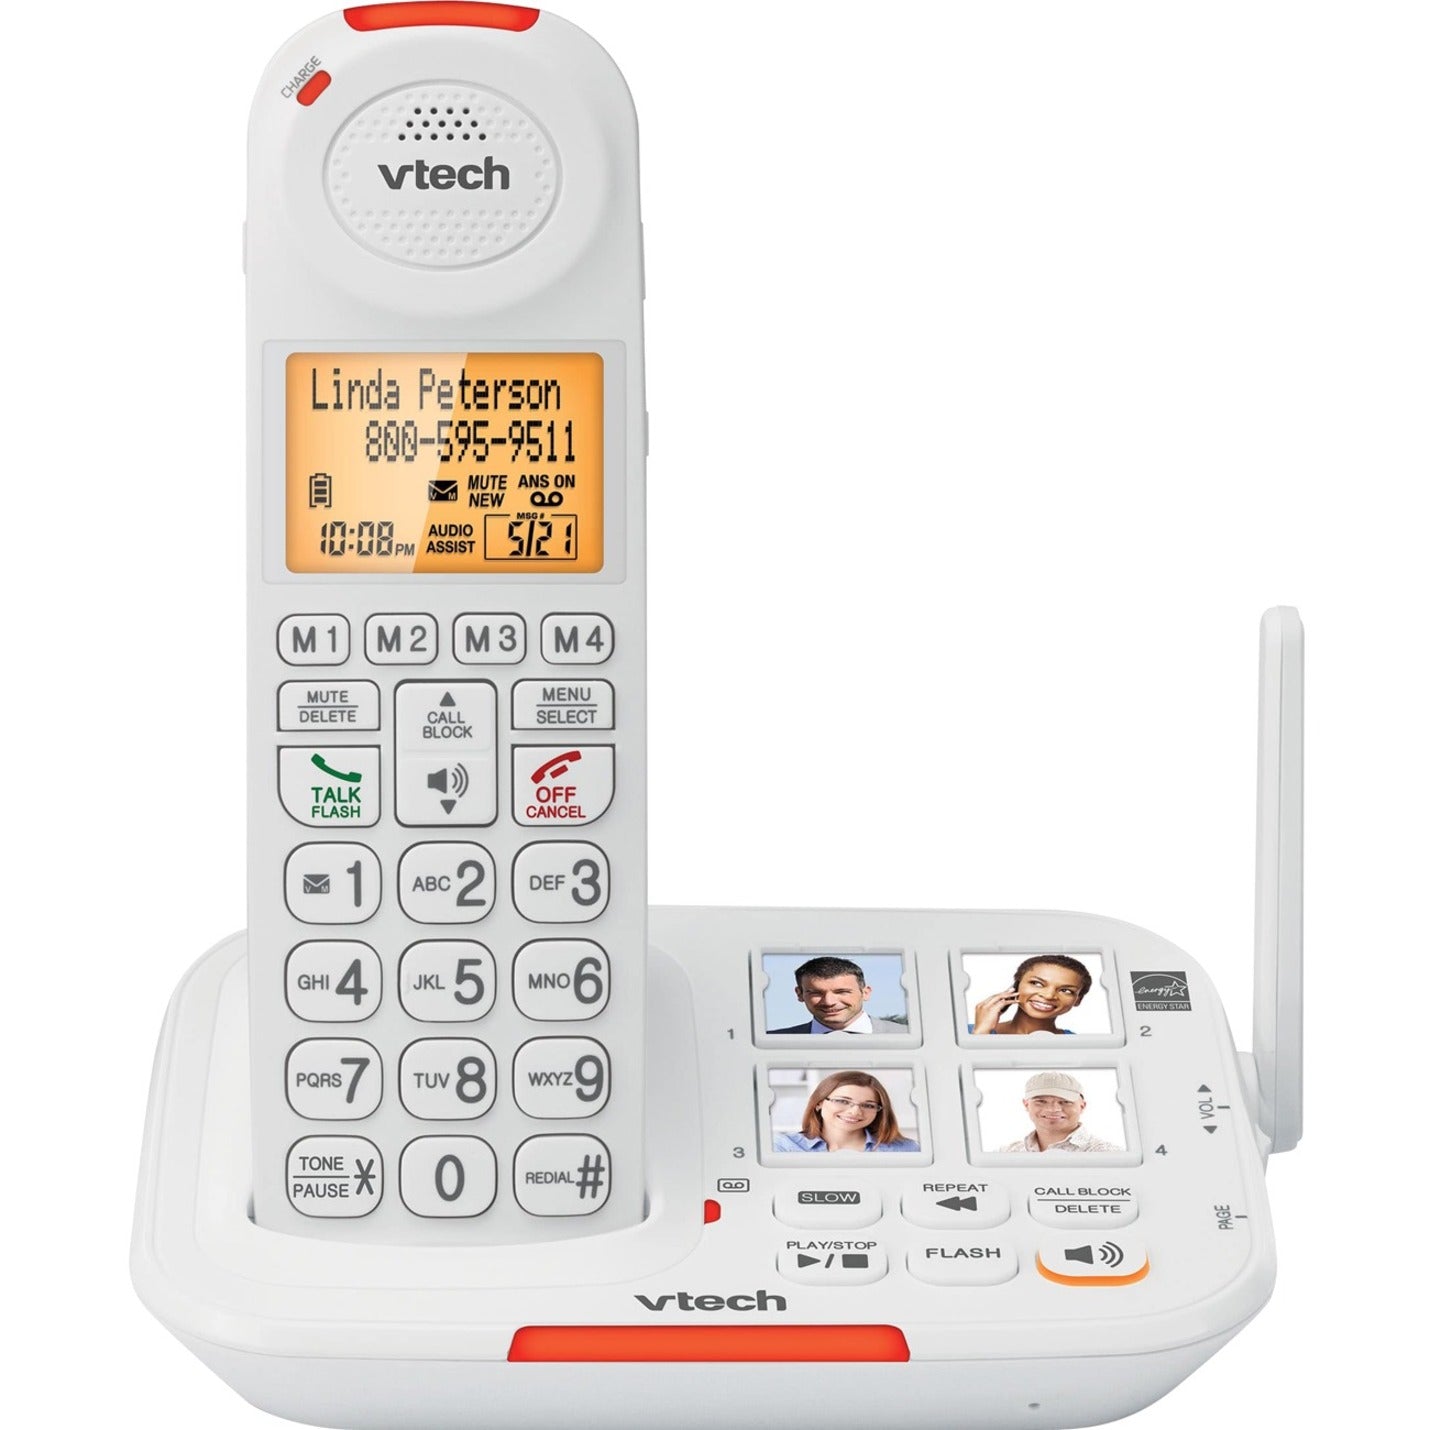 VTech SN5127 DECT 6.0 Cordless Phone, Smart Call Blocker, Speakerphone, 1.93 GHz Frequency Band